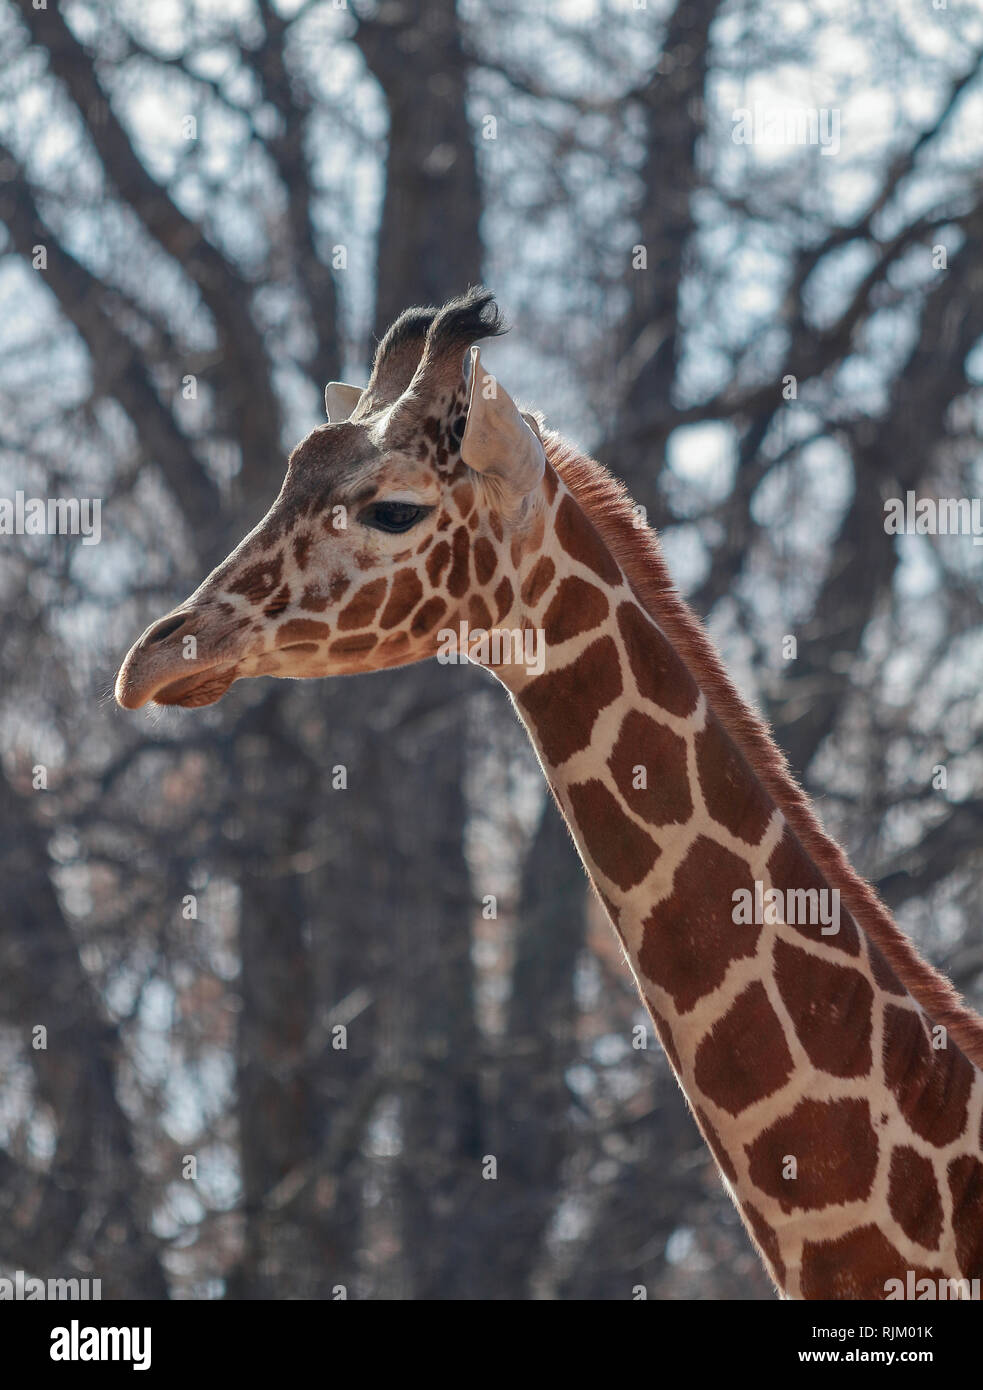 Closeup of Giraffe head in Denver Zoo, winter day Stock Photo